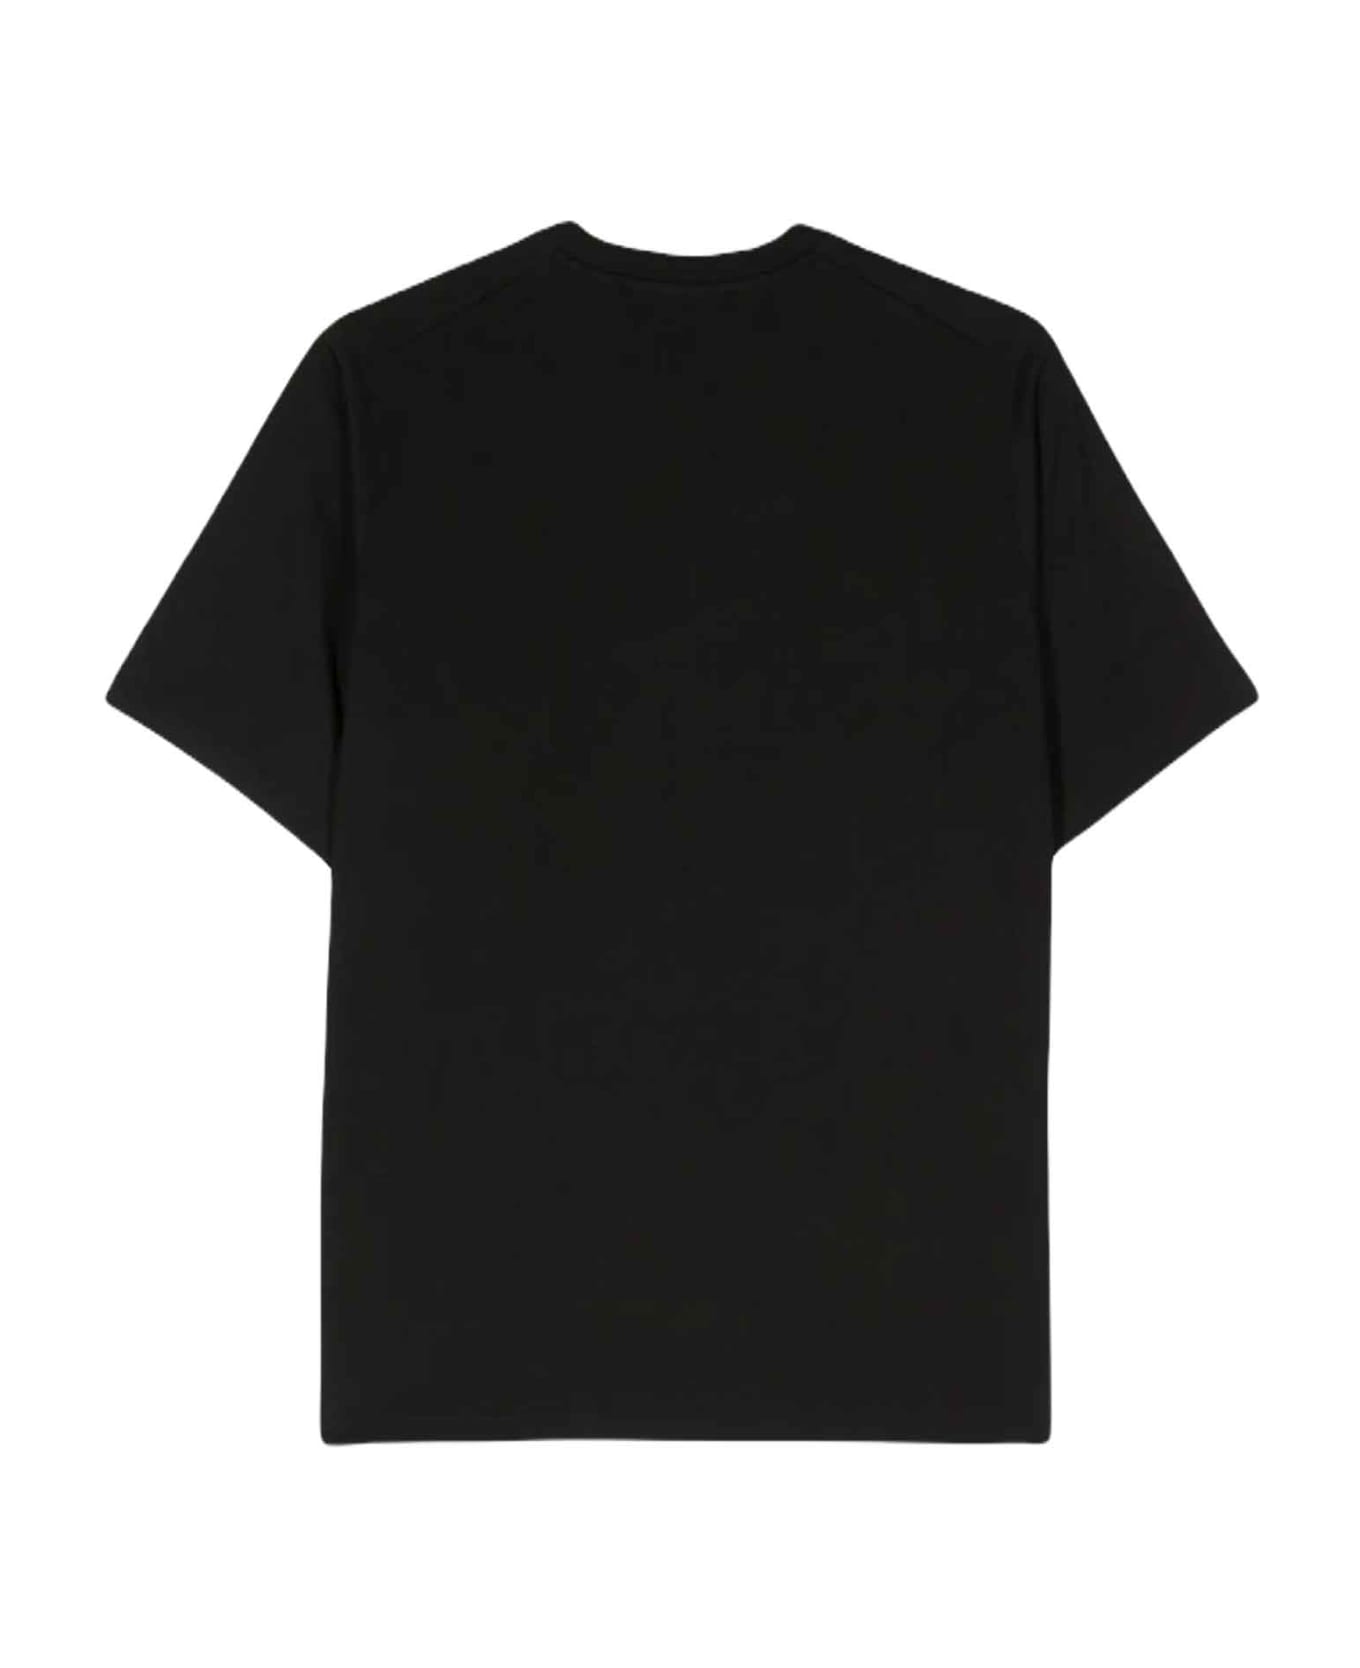 Dsquared2 Black T-shirt Unisex - Nero Tシャツ＆ポロシャツ